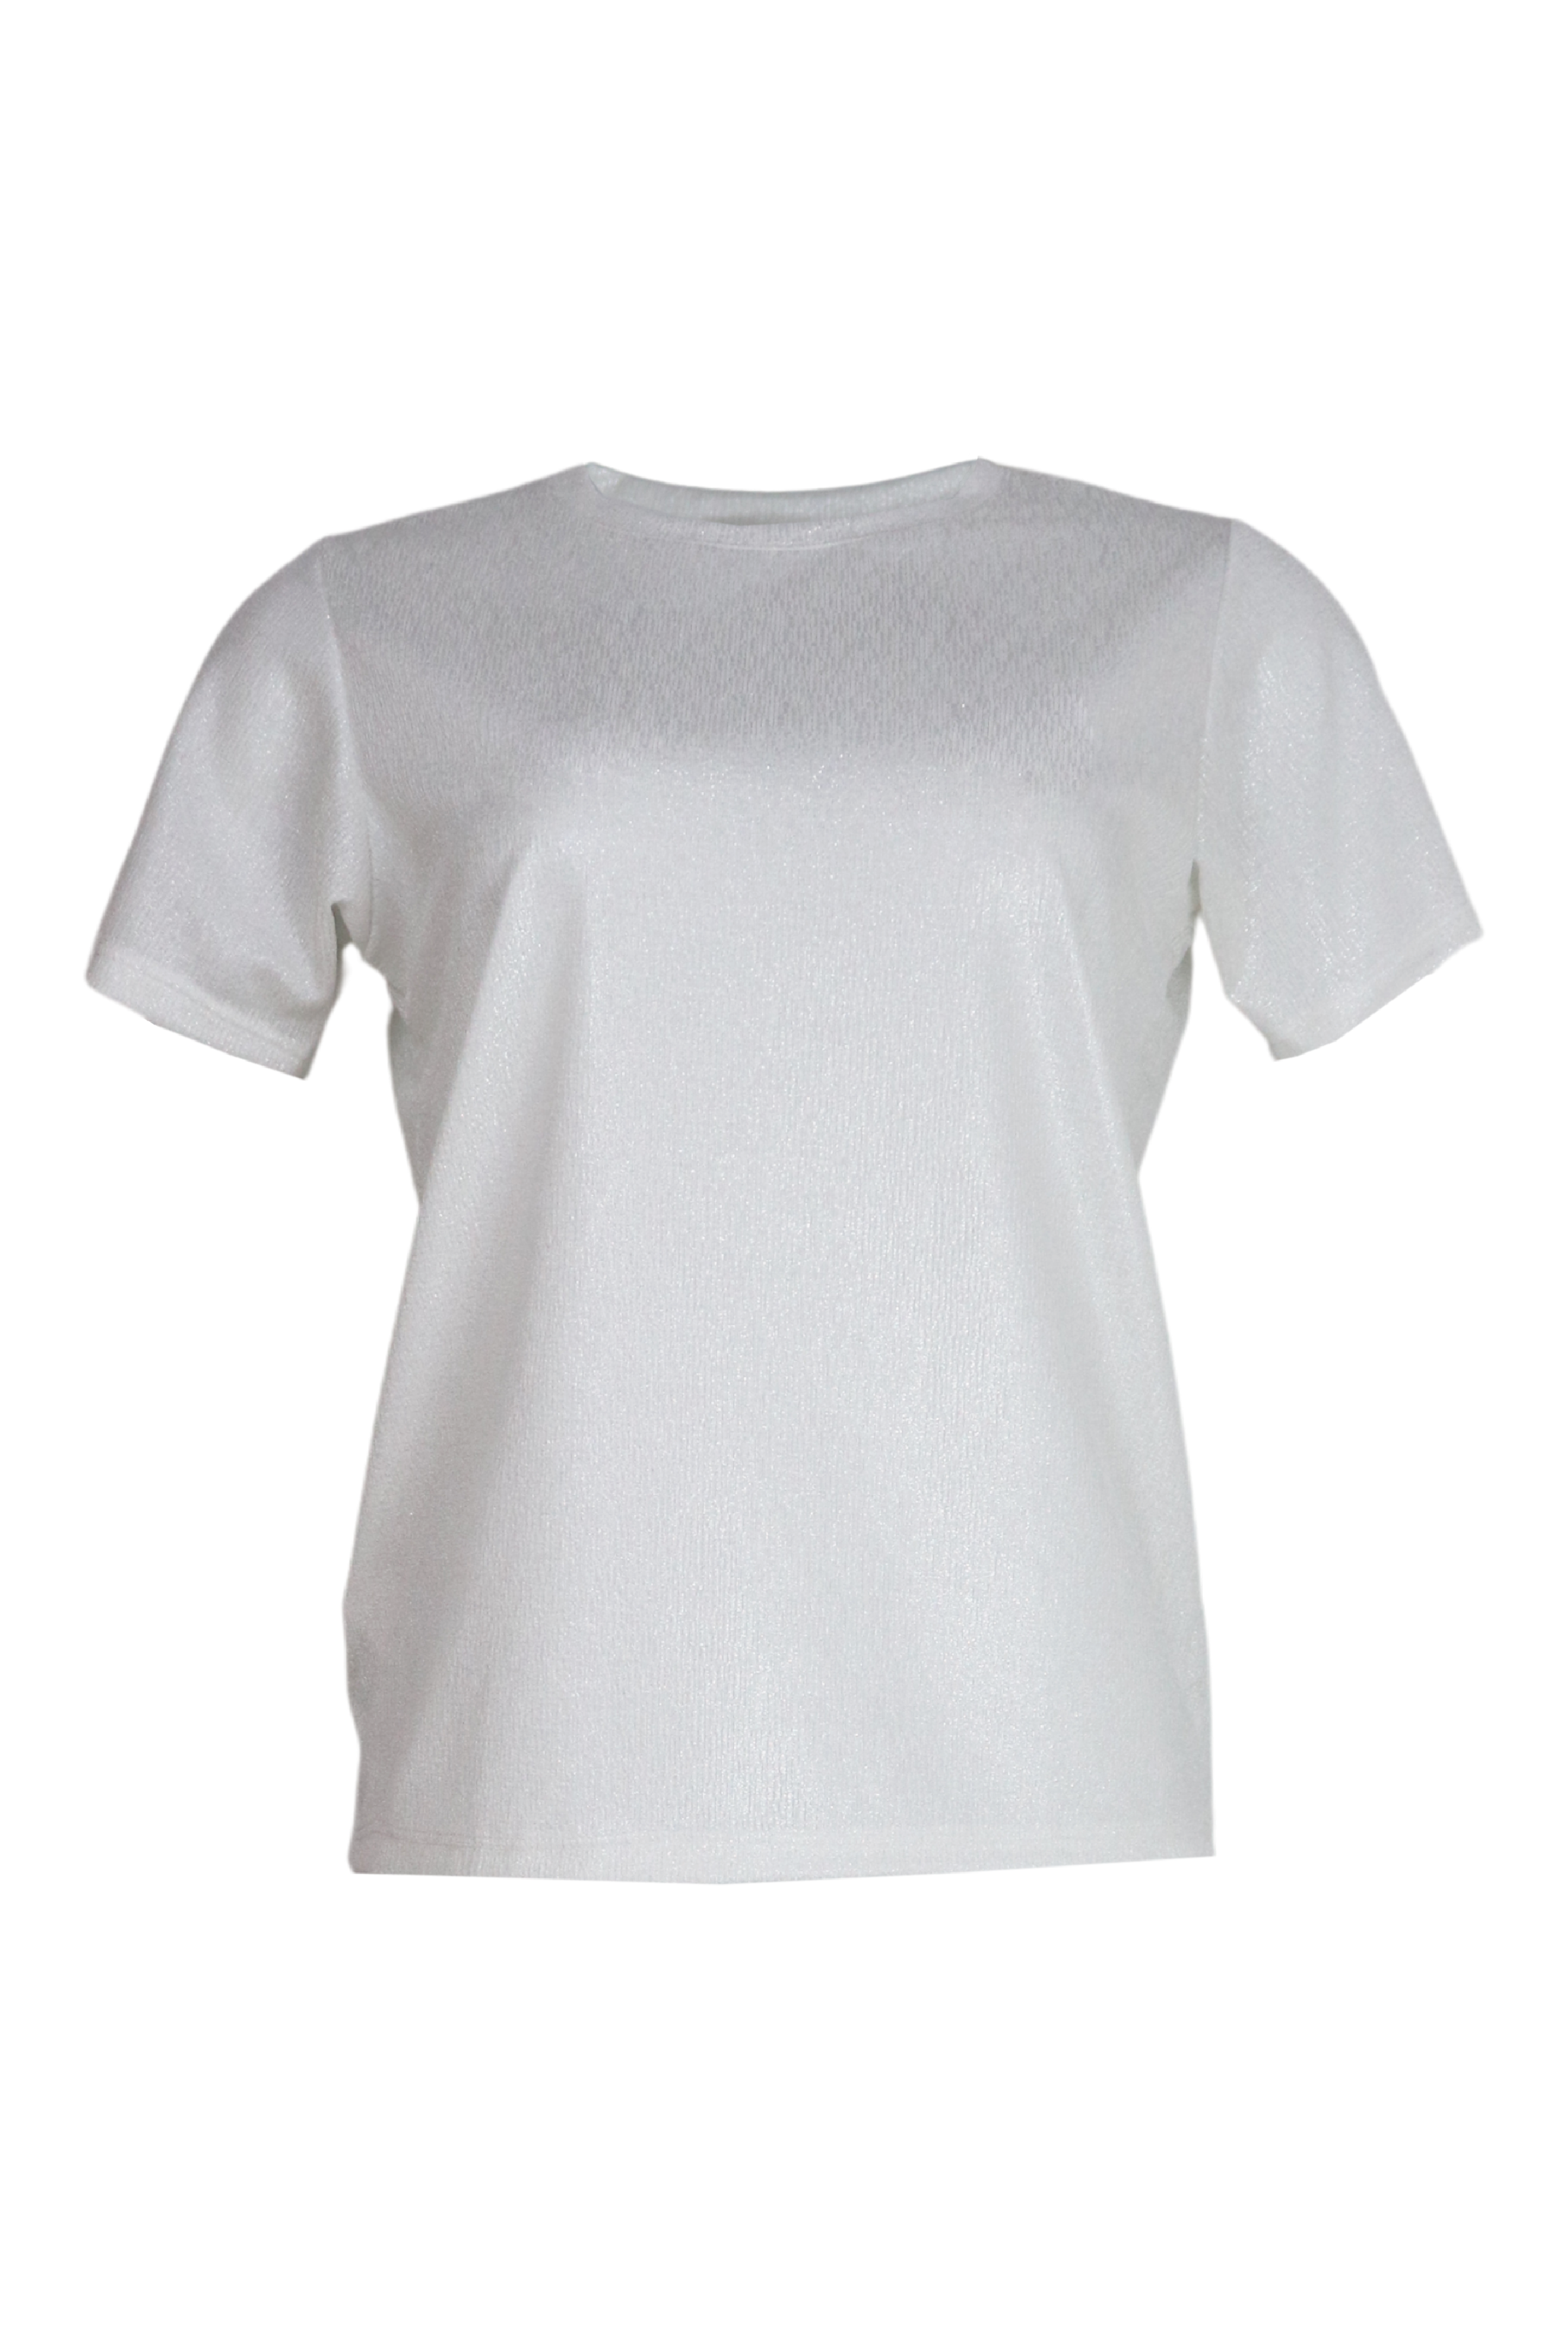 Camiseta manga corta satinada blanca